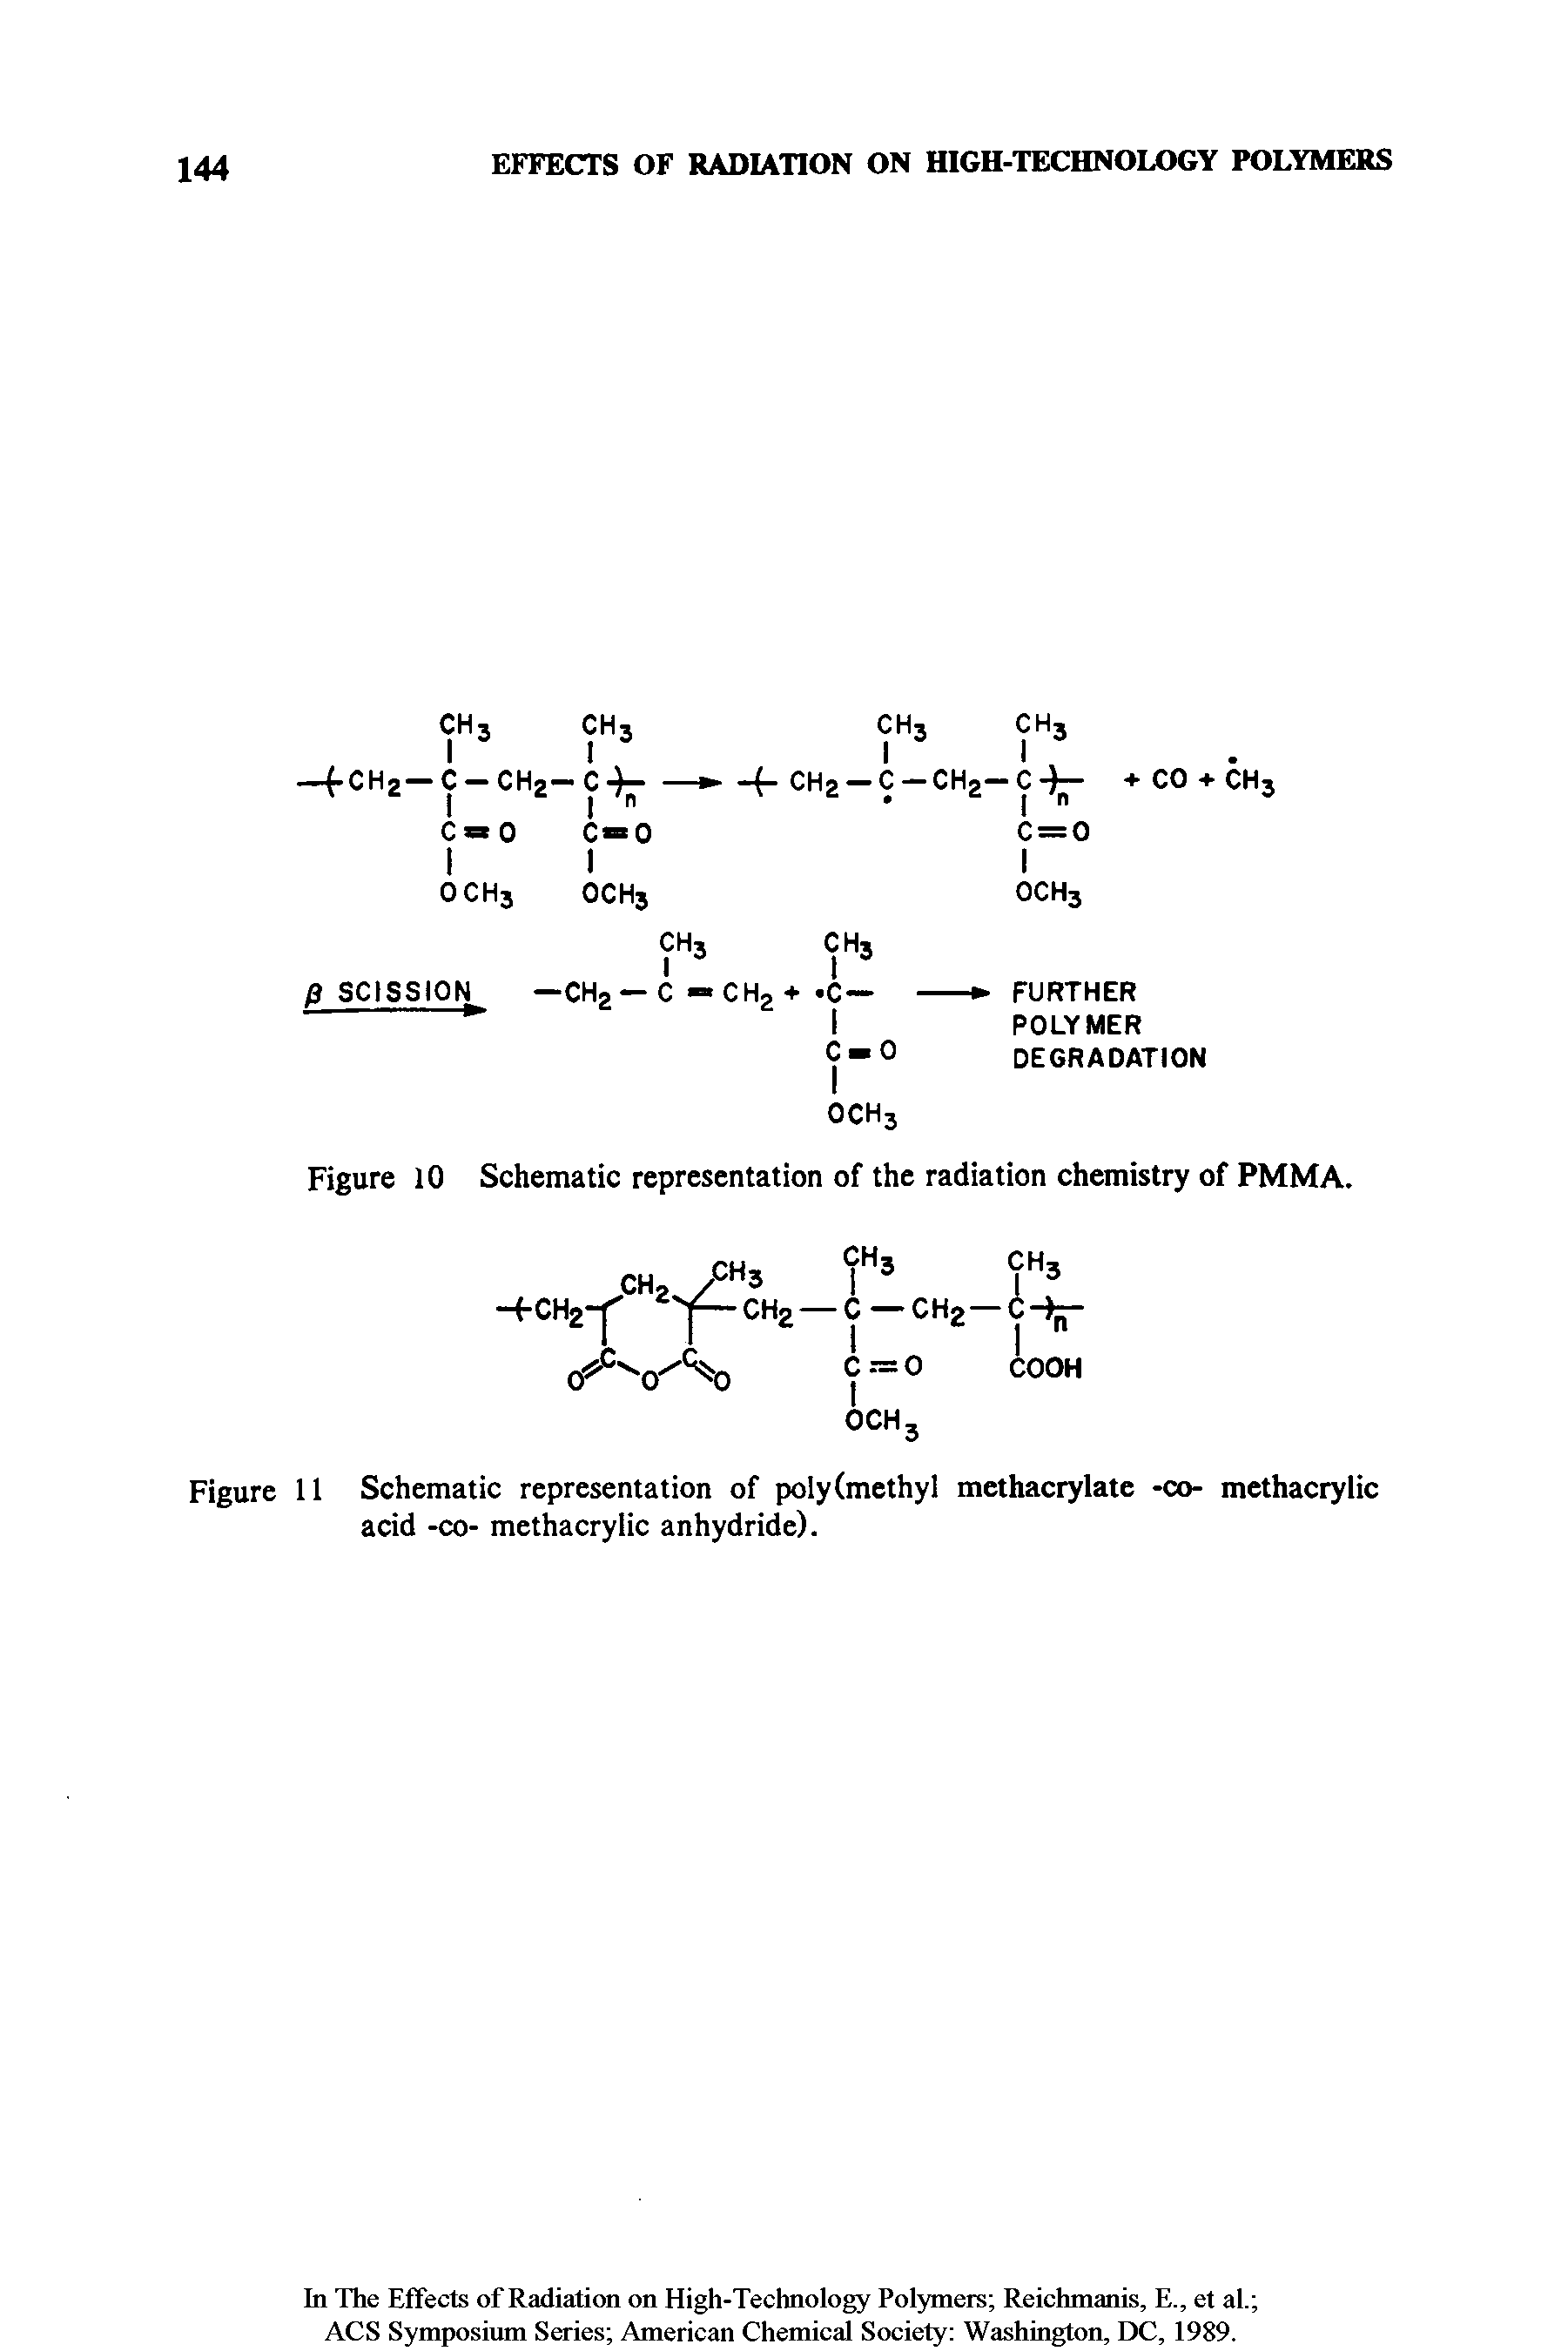 Figure 11 Schematic representation of poly (methyl methacrylate -co- methacrylic acid -co- methacrylic anhydride).